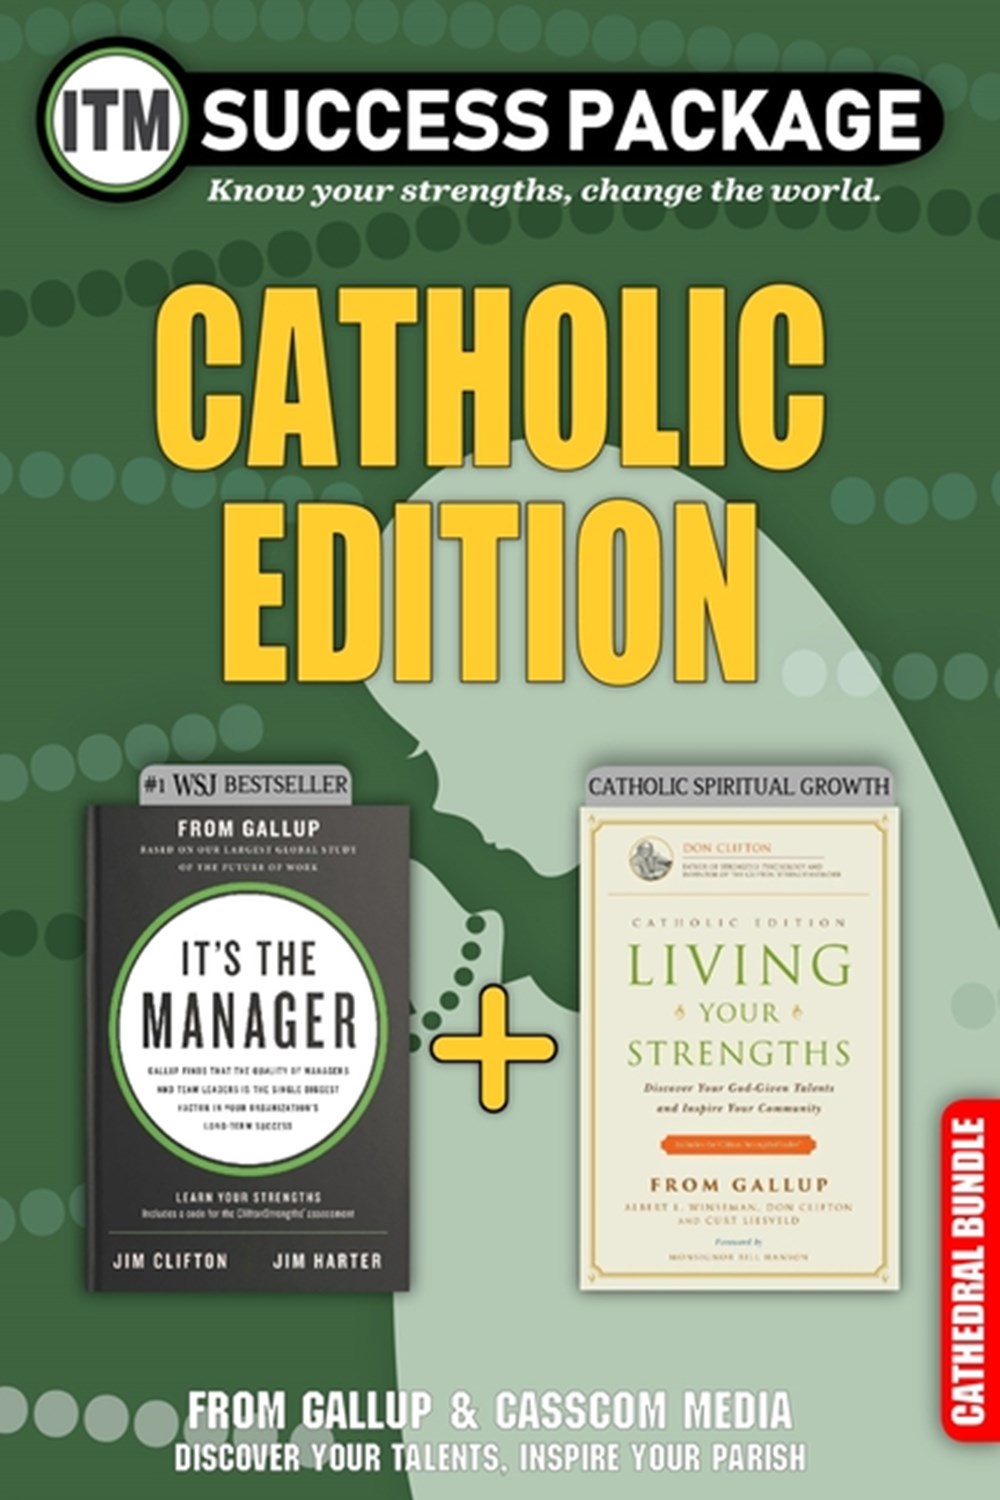 Itm Success Package Catholic Edition